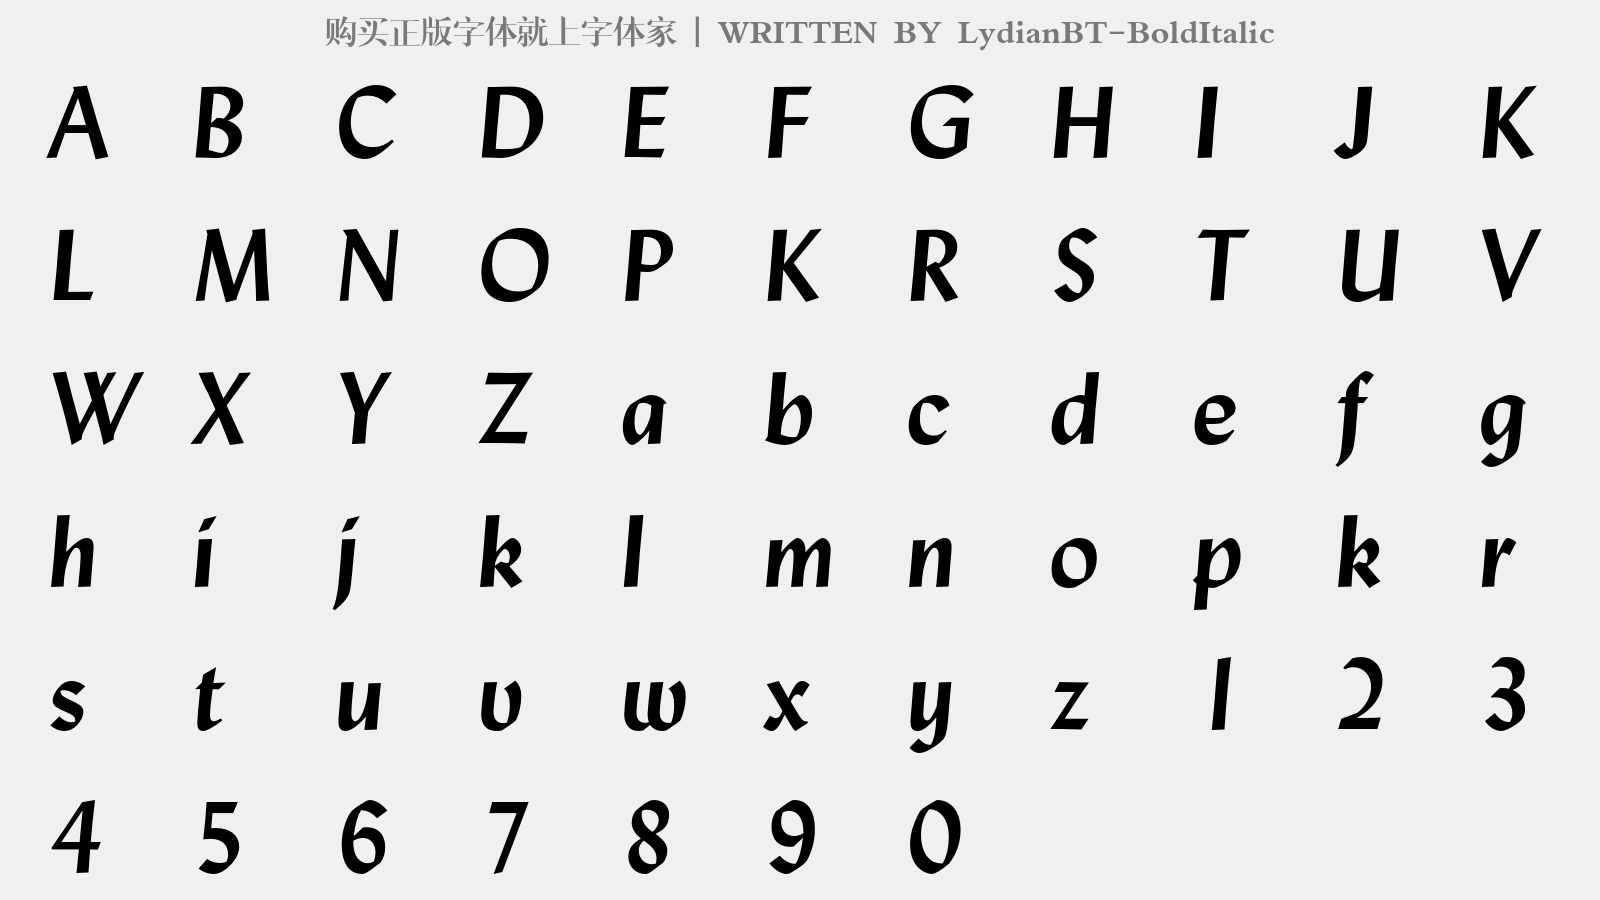 LydianBT-BoldItalic - 大写字母/小写字母/数字